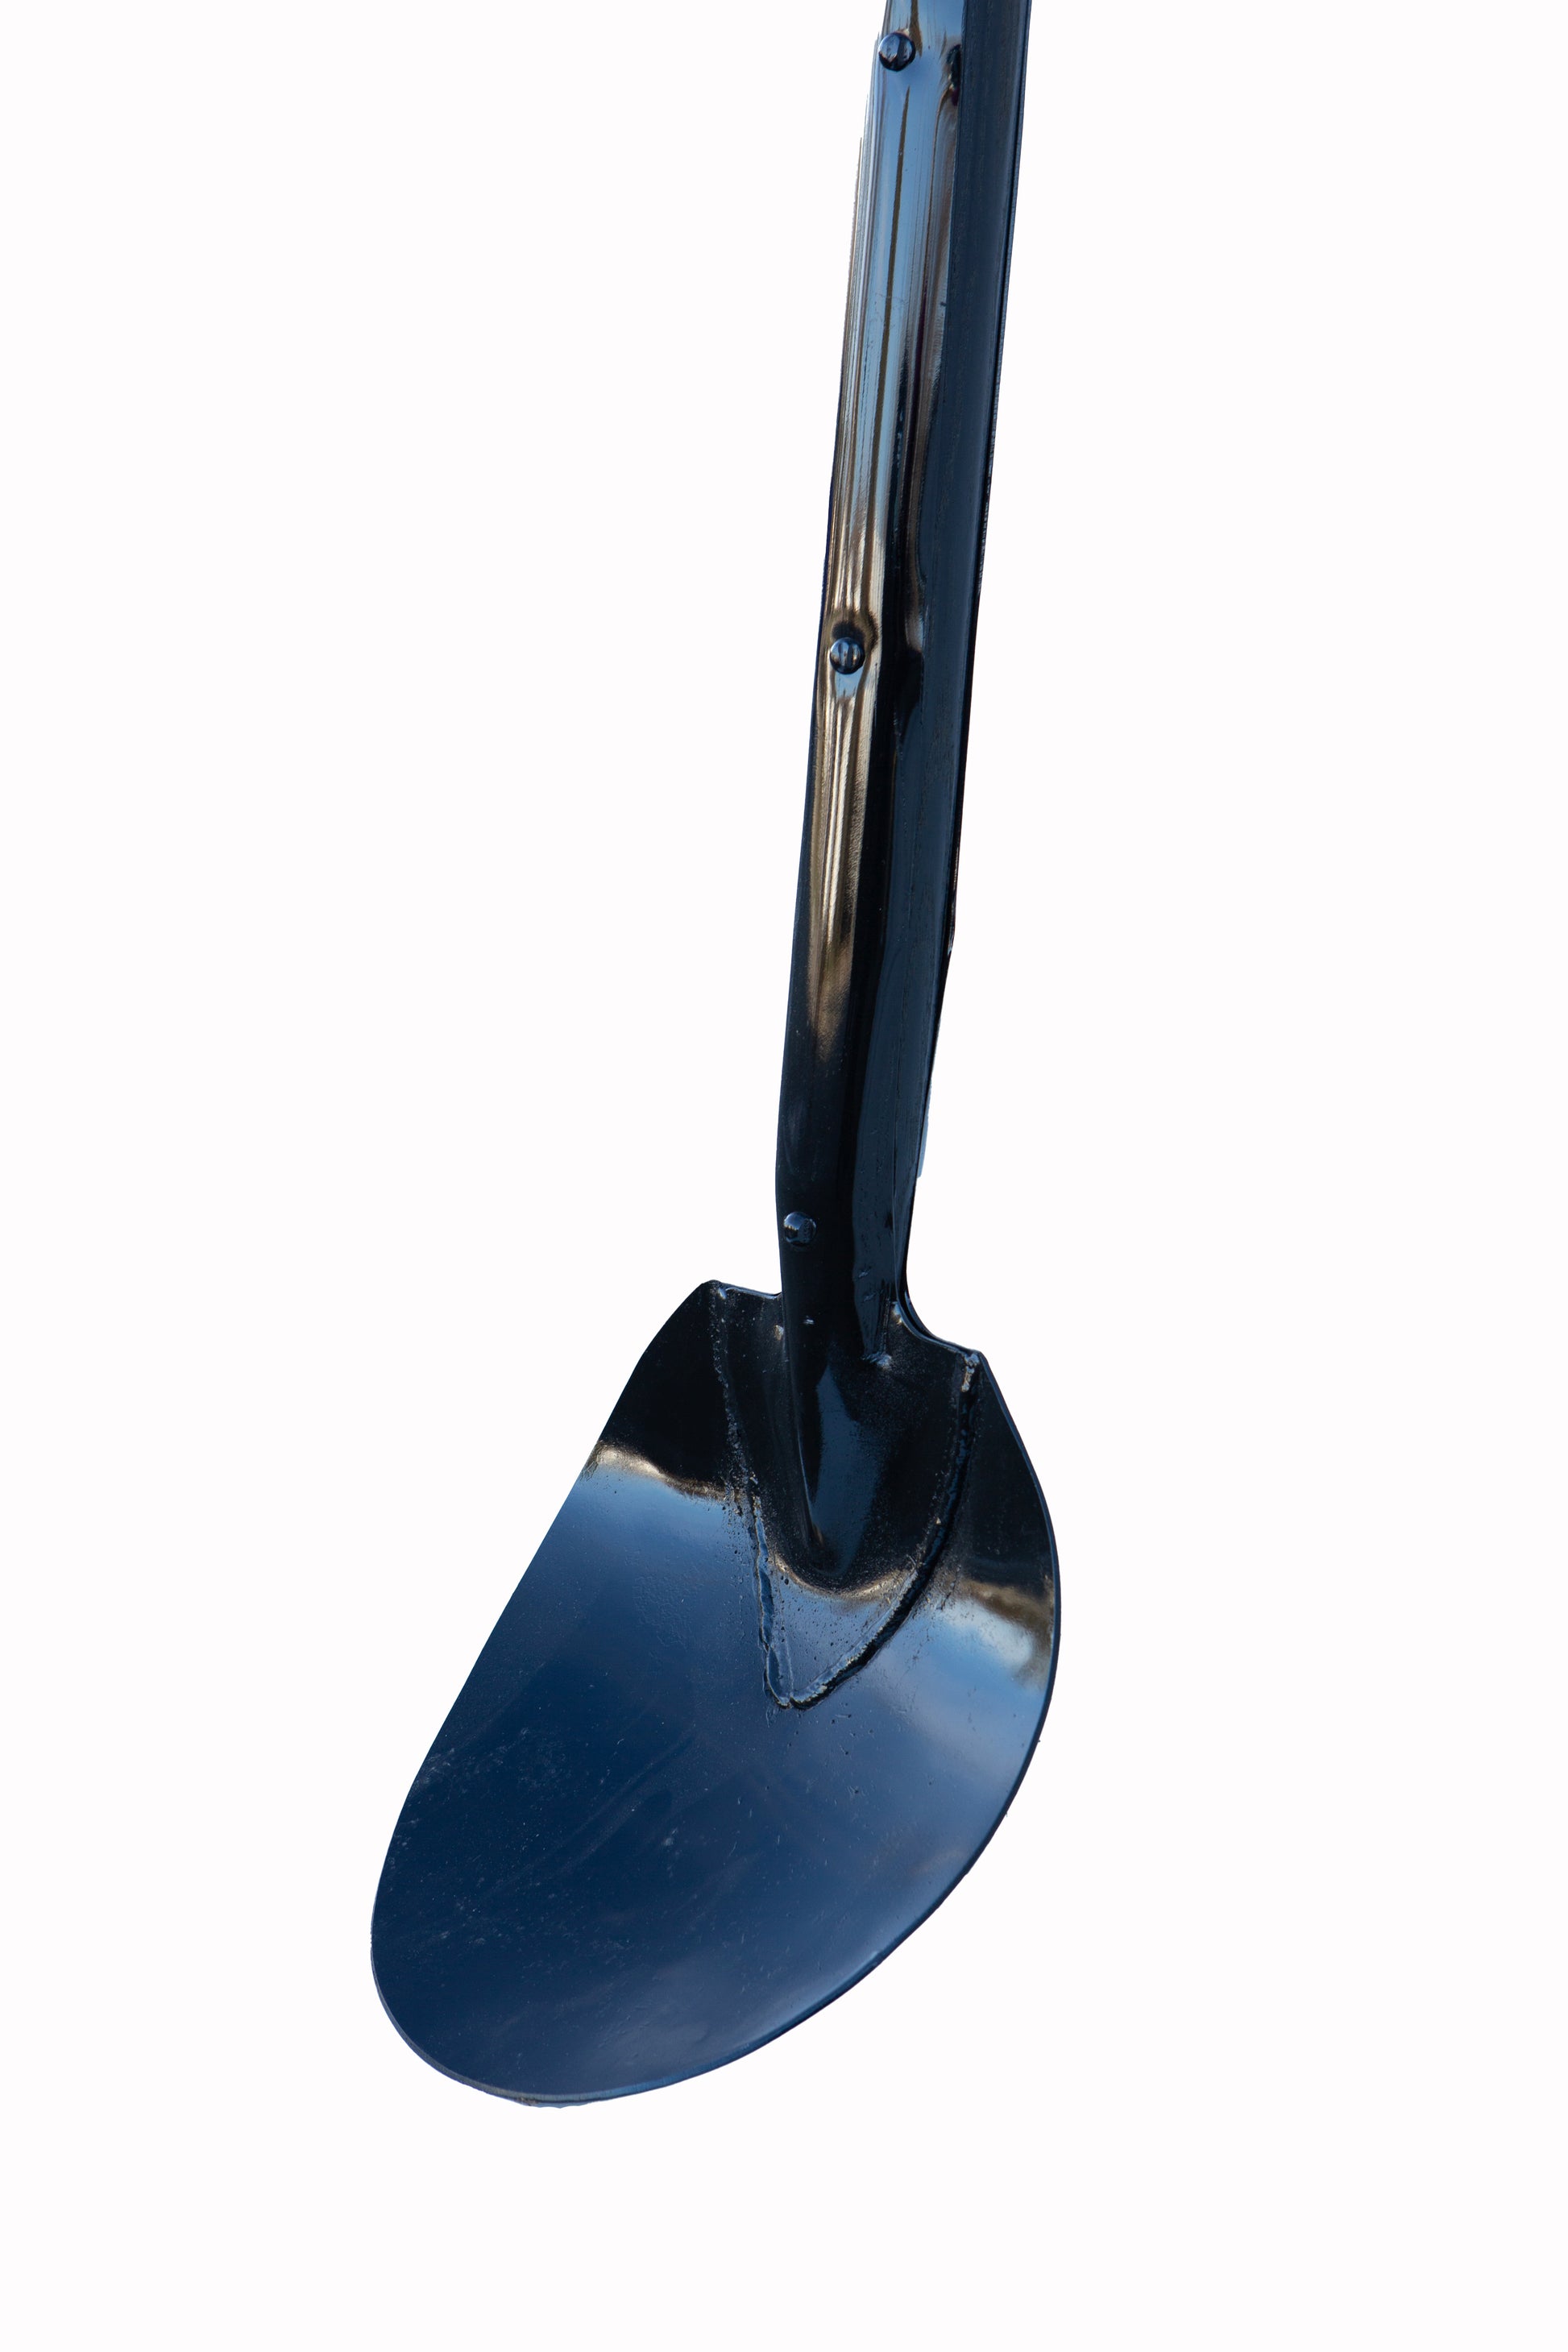 Oshkosh Tools eastern spoon blade